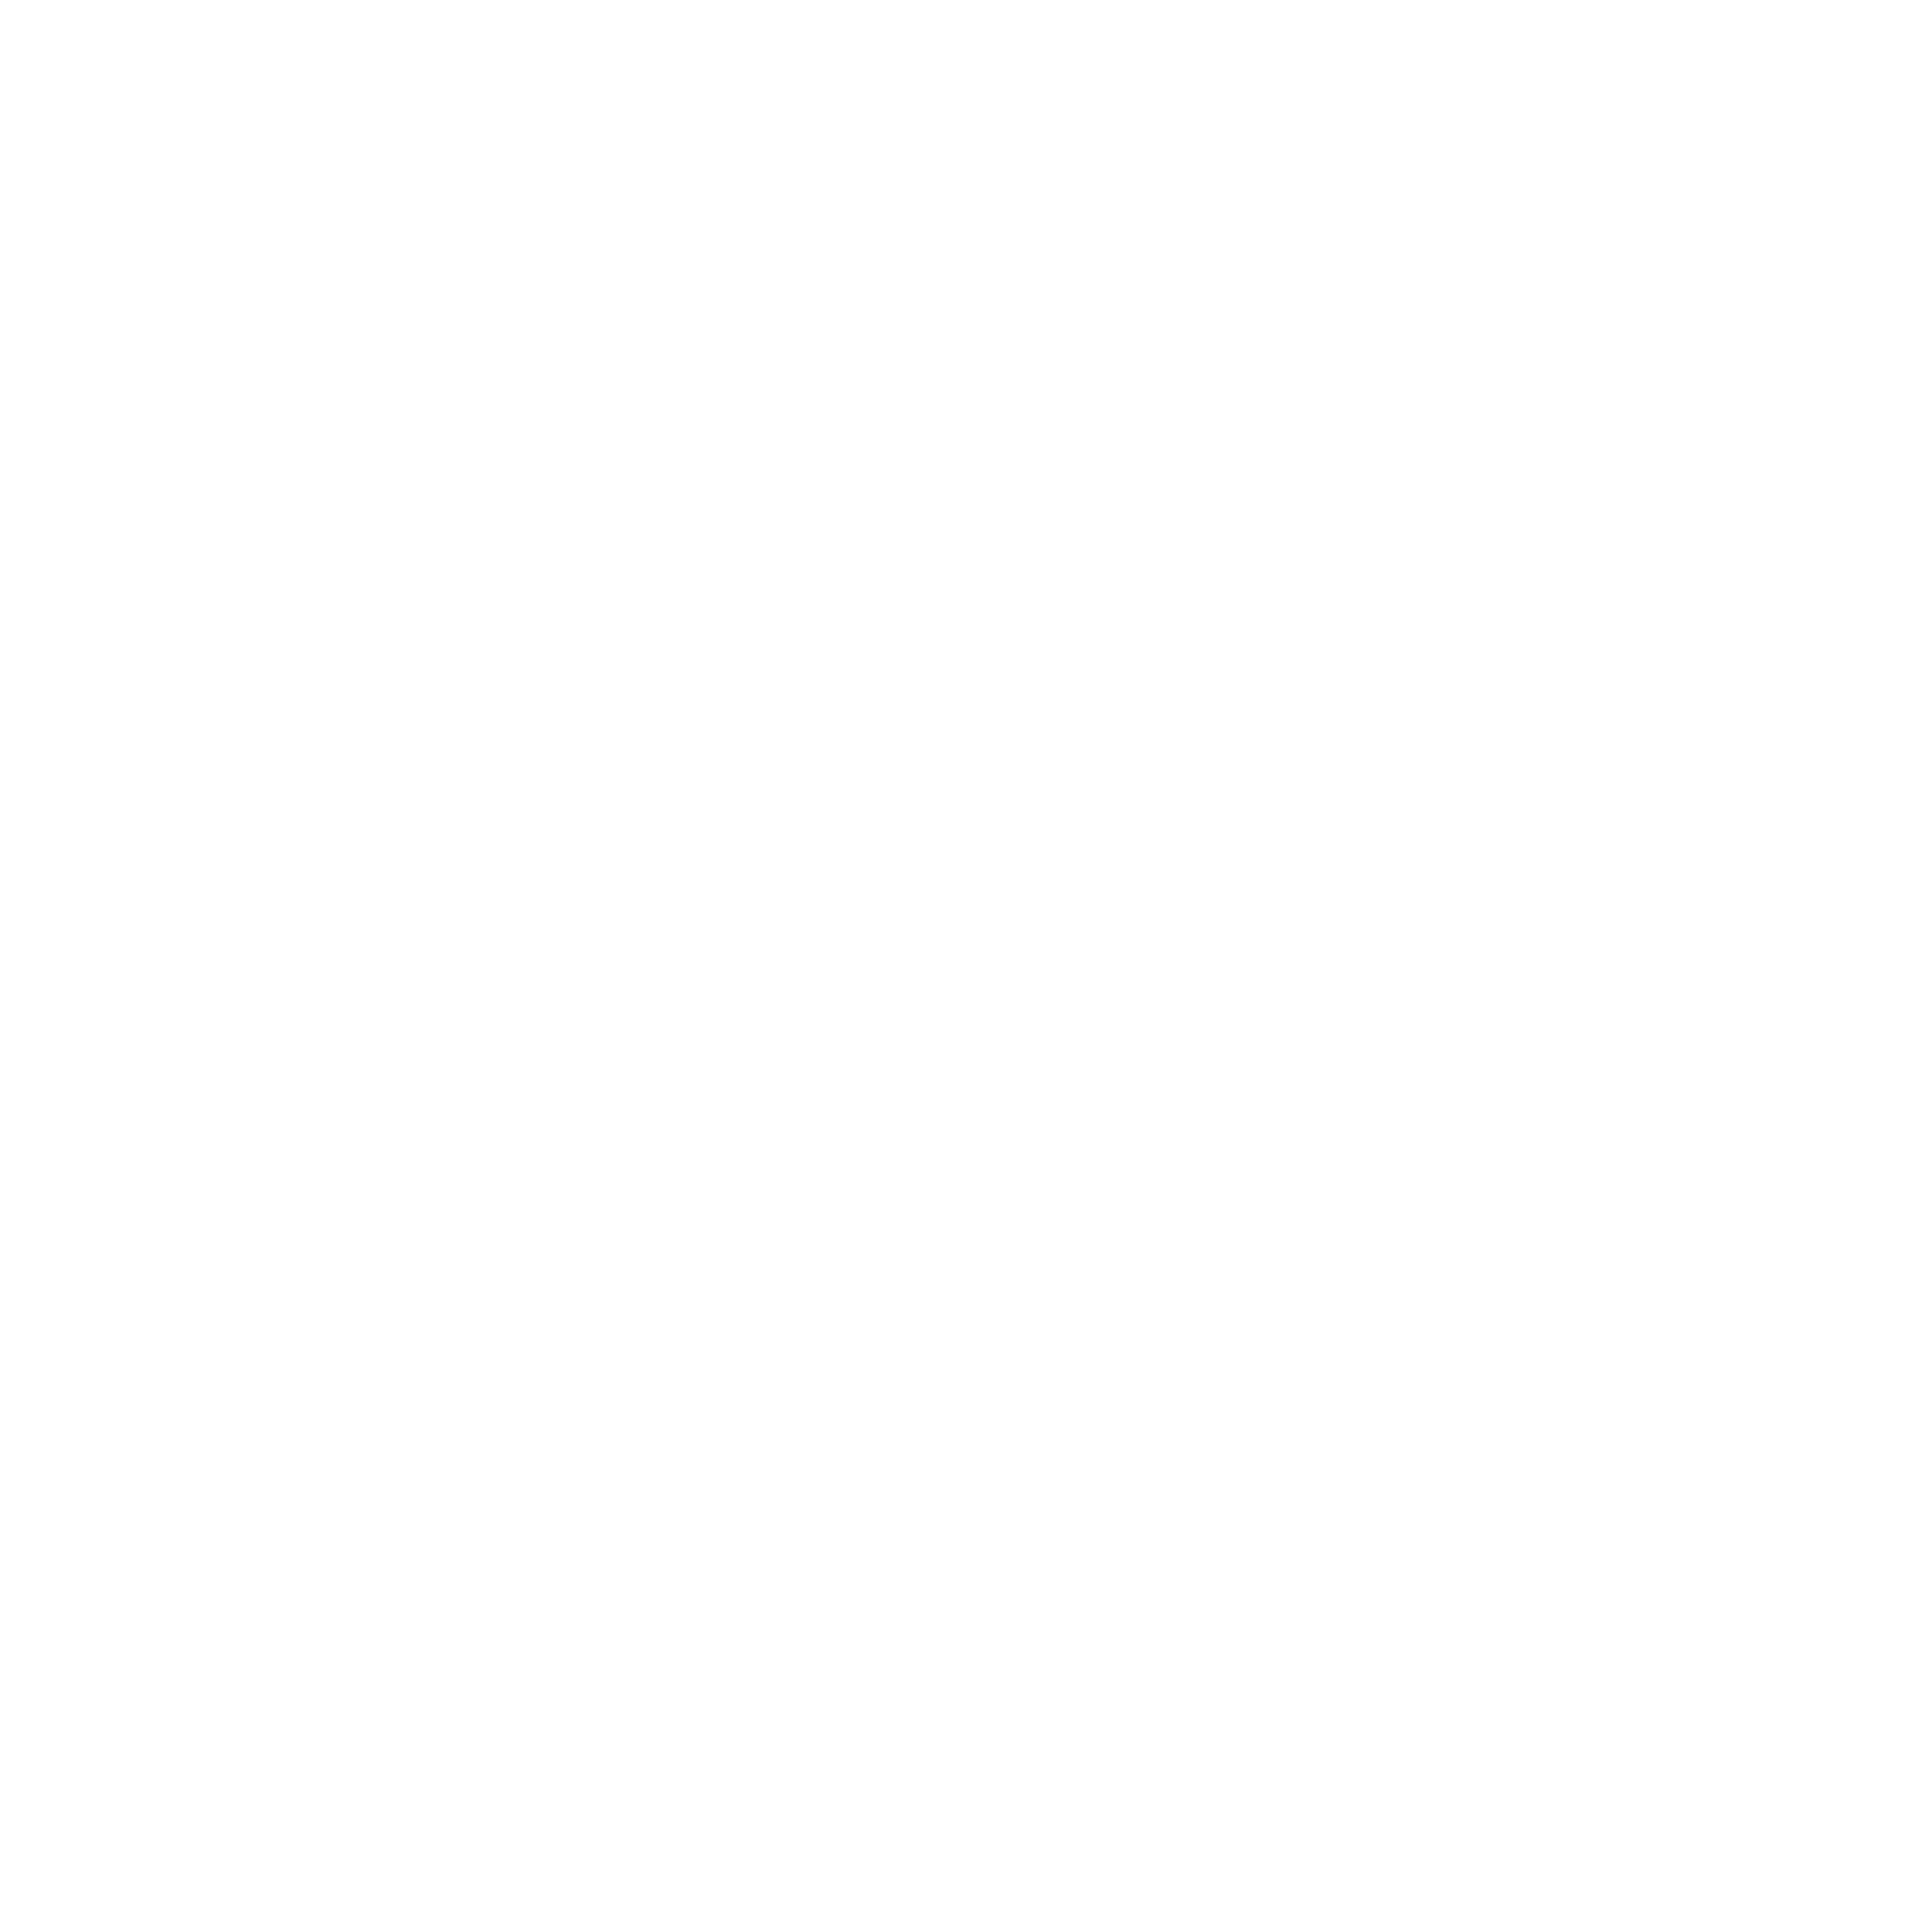 Hart-logos-black-trans9.png